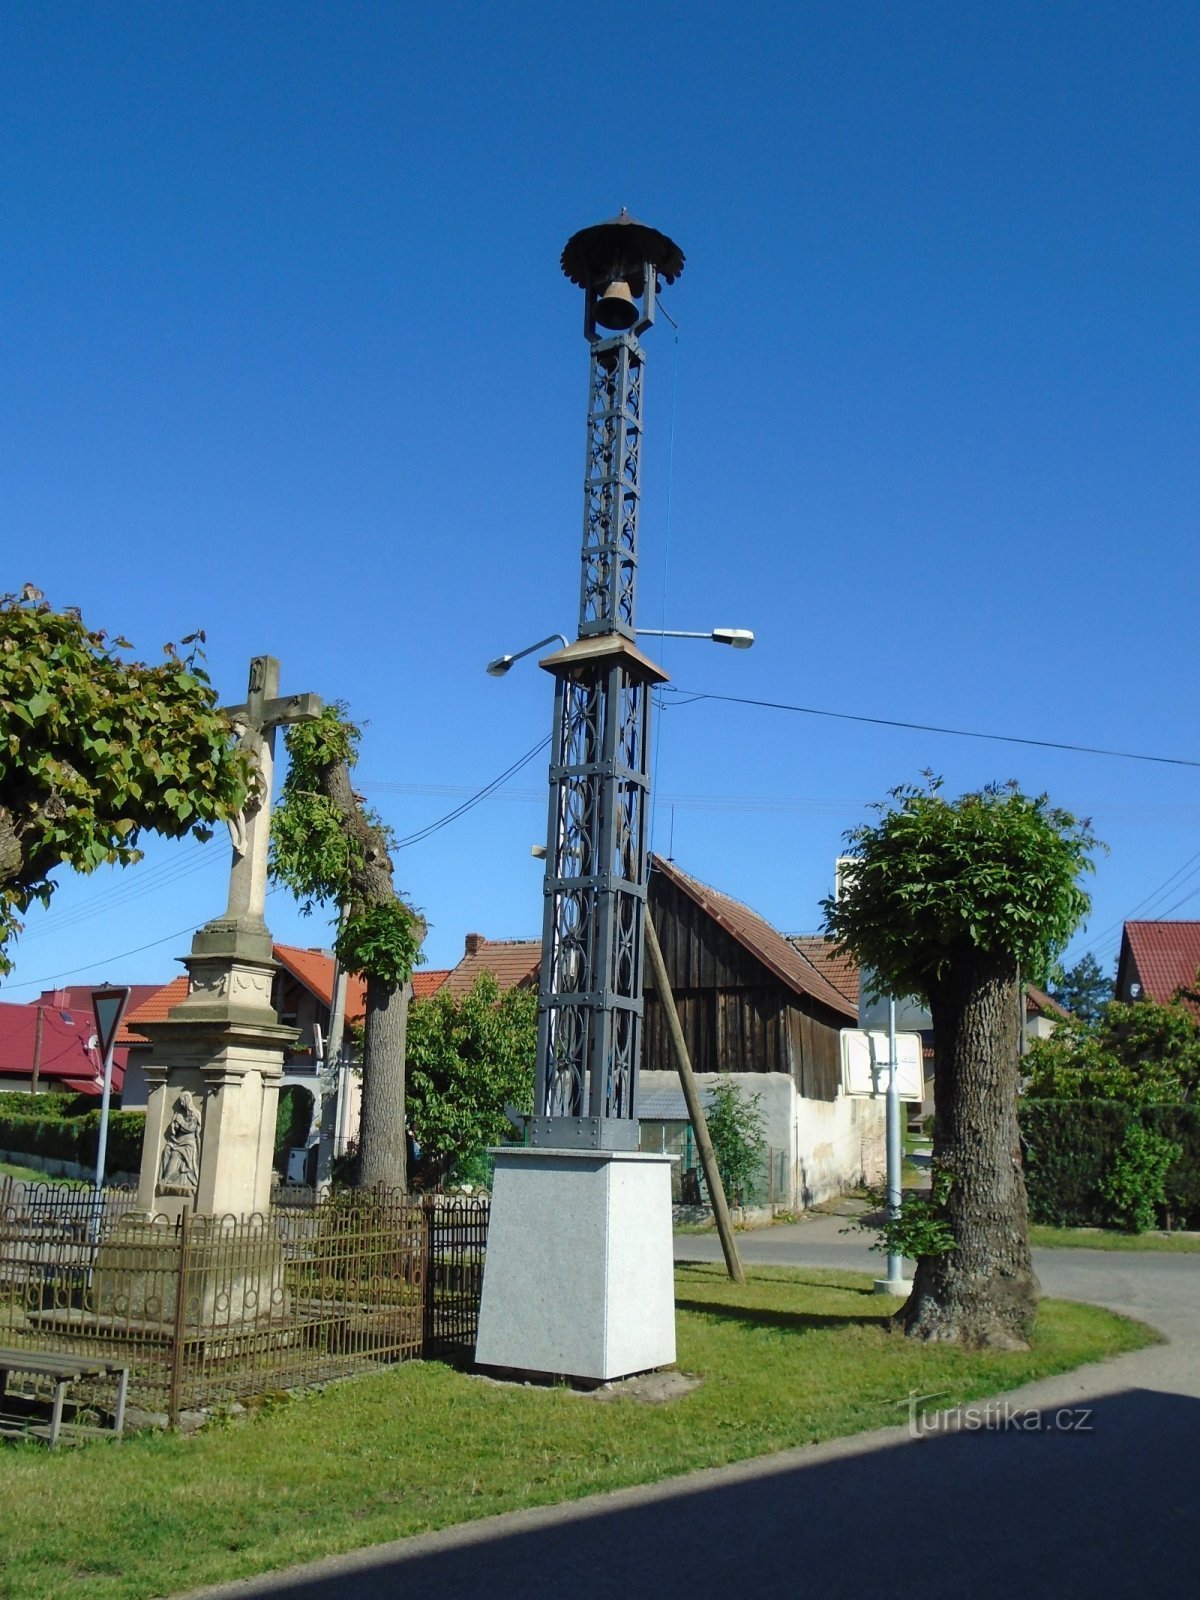 Bell tower (Rózběřice)